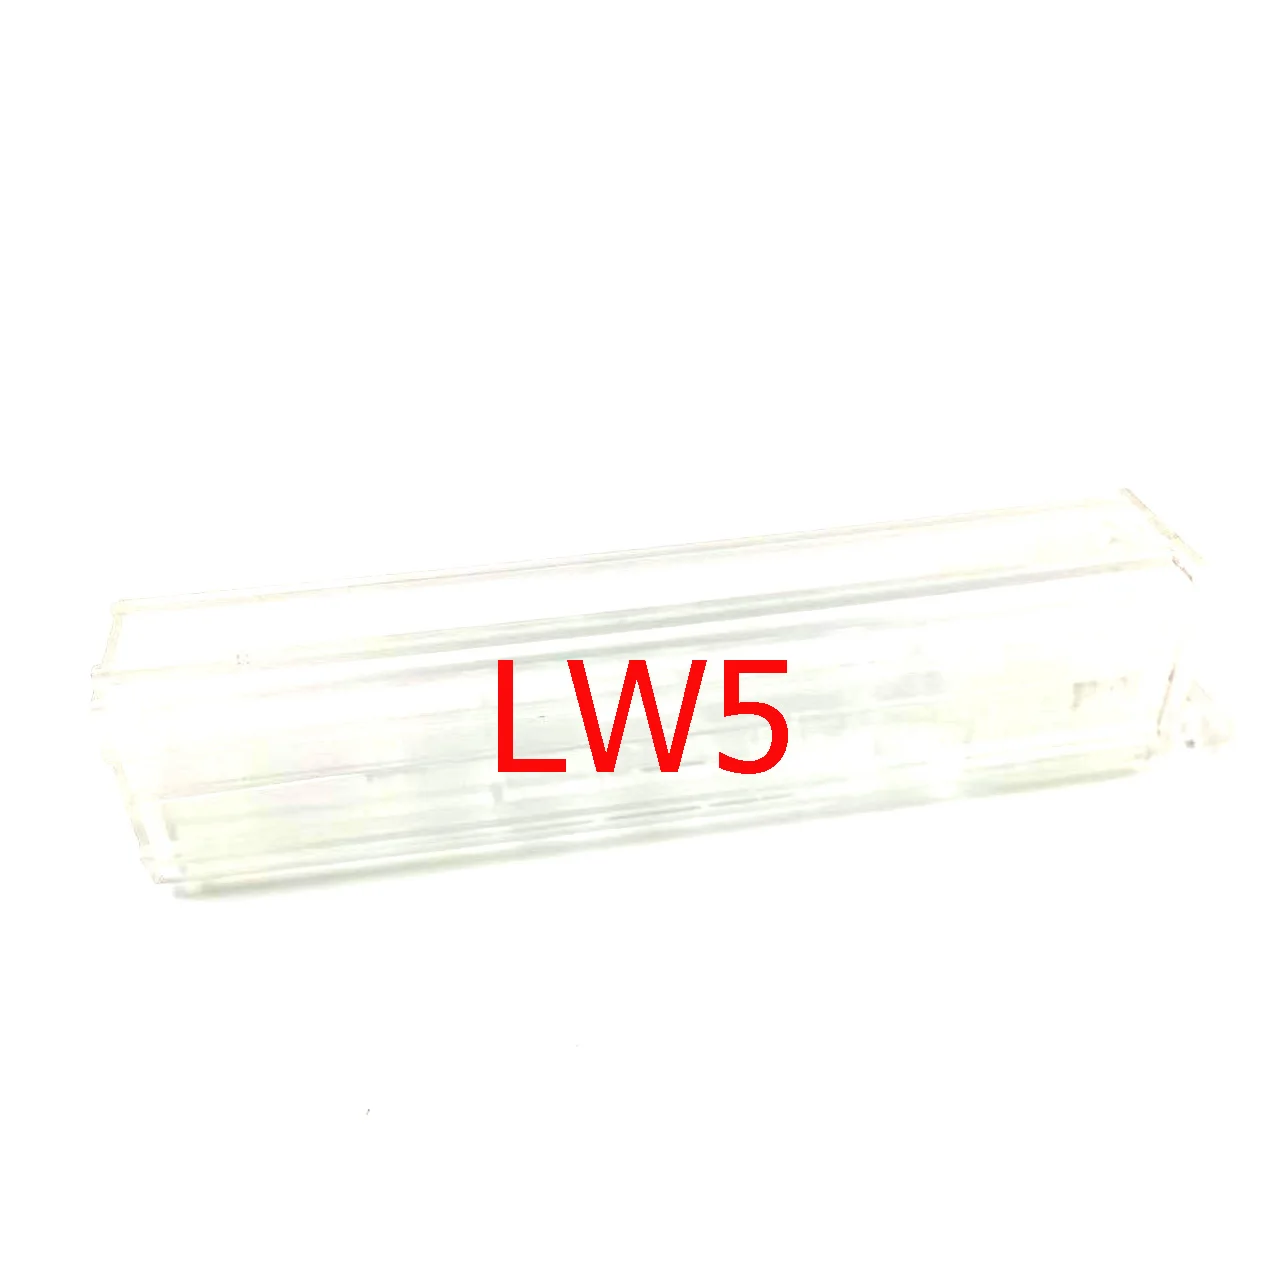 

Lishi 2 in 1 Tools for Door Lock,LW4 LW5 KW5 SC1 Yale5 SC20 LockPick Set for Professional Locksmith